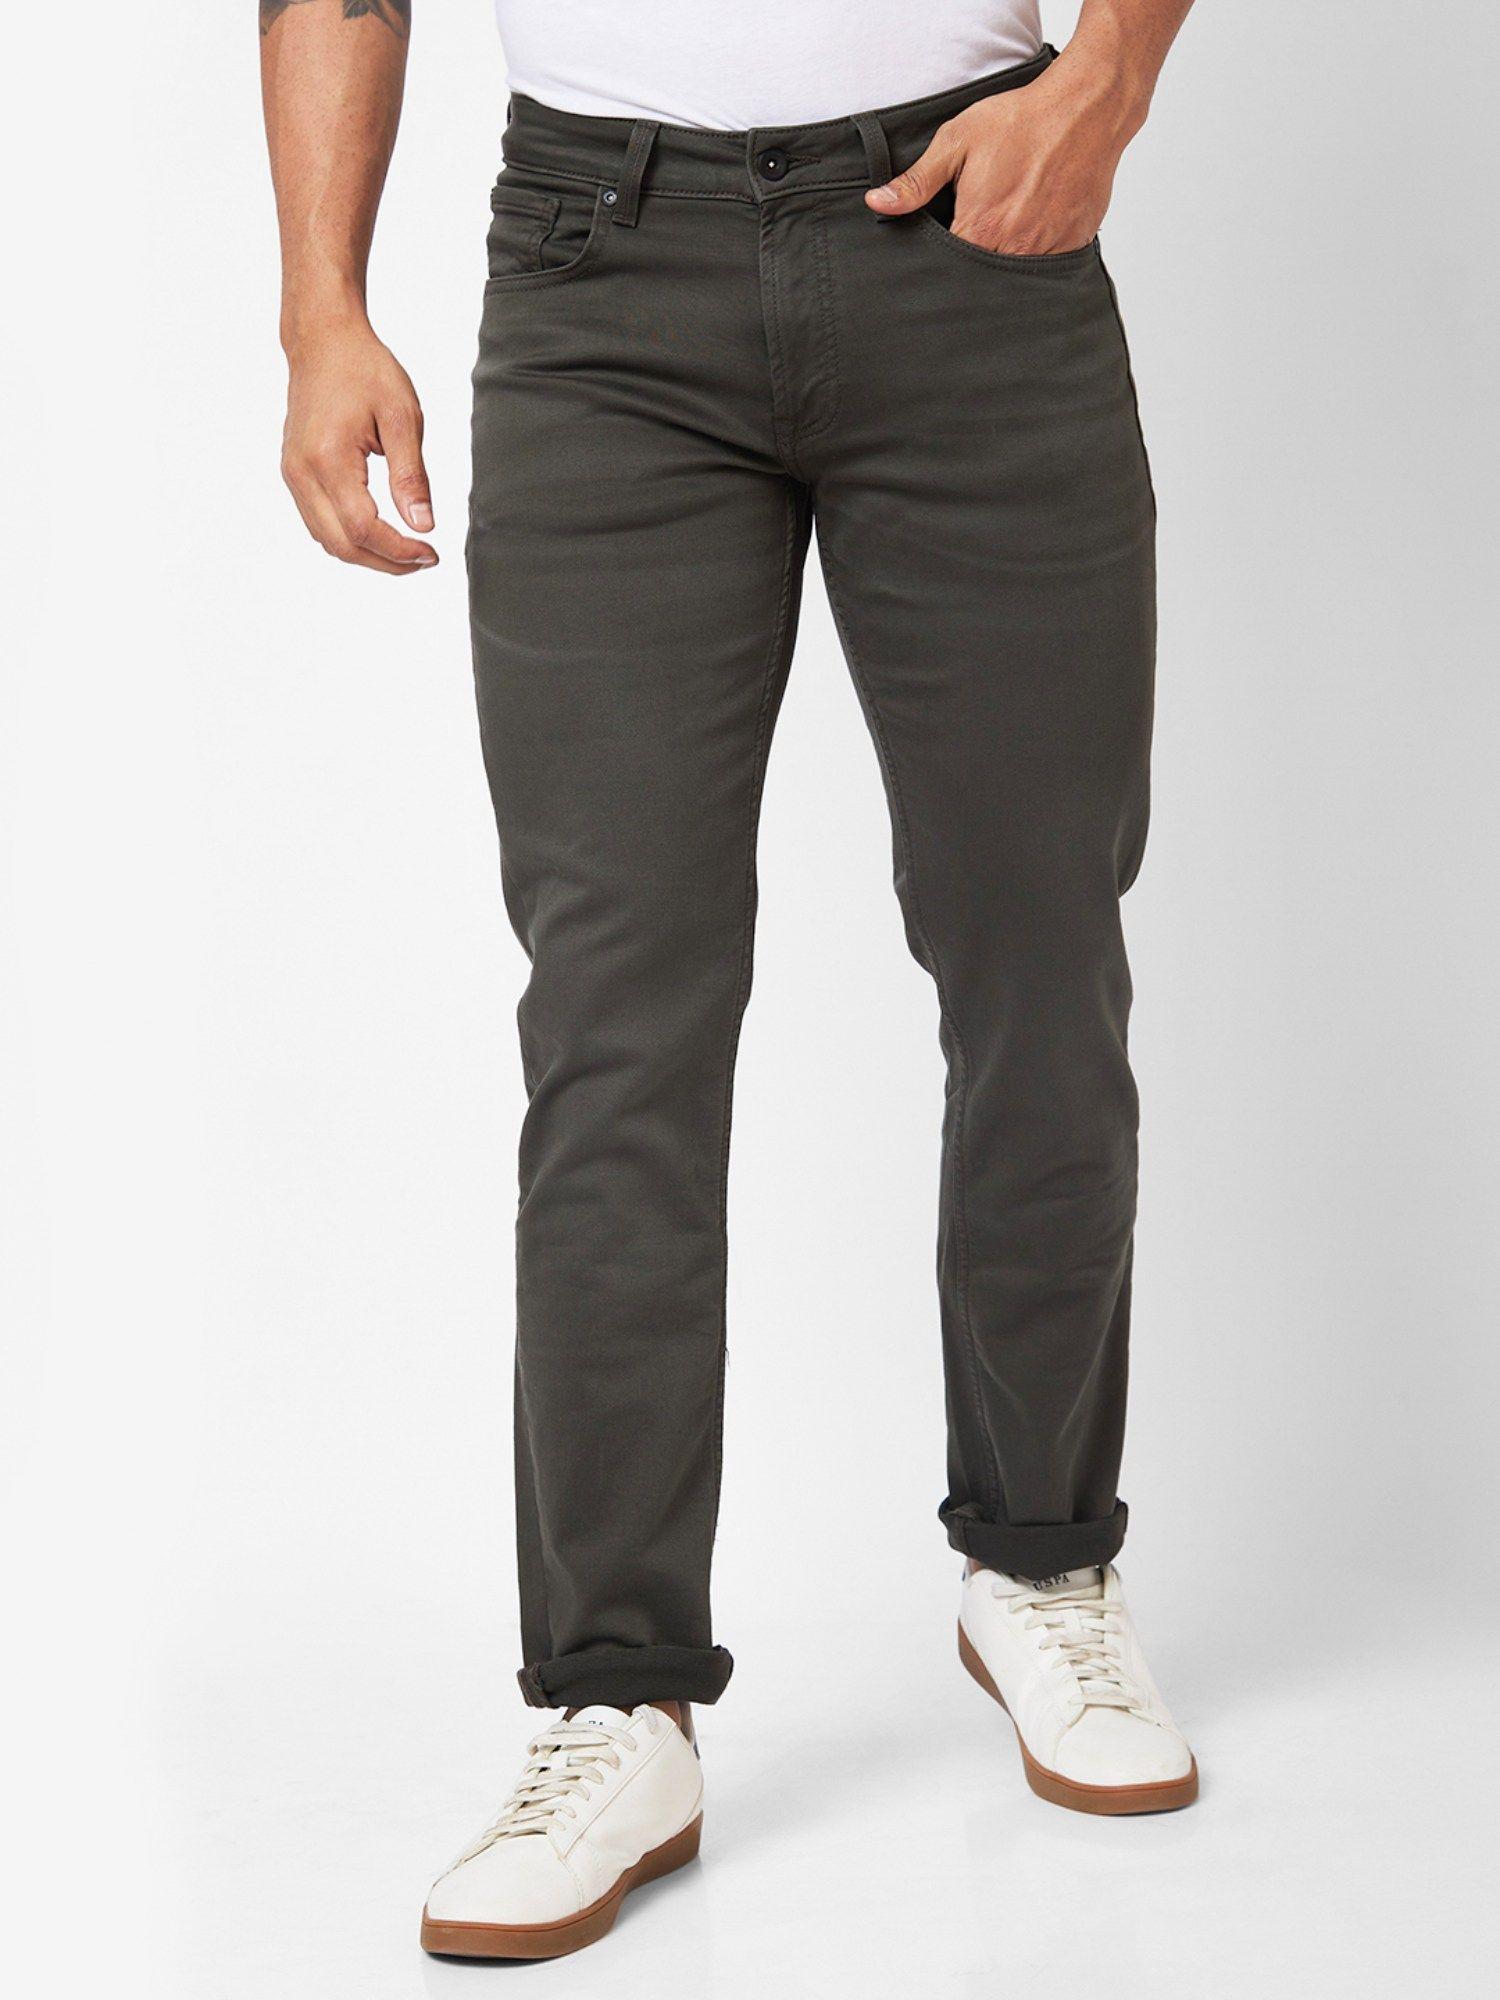 mid-rise-regular-fit-green-jeans-for-men